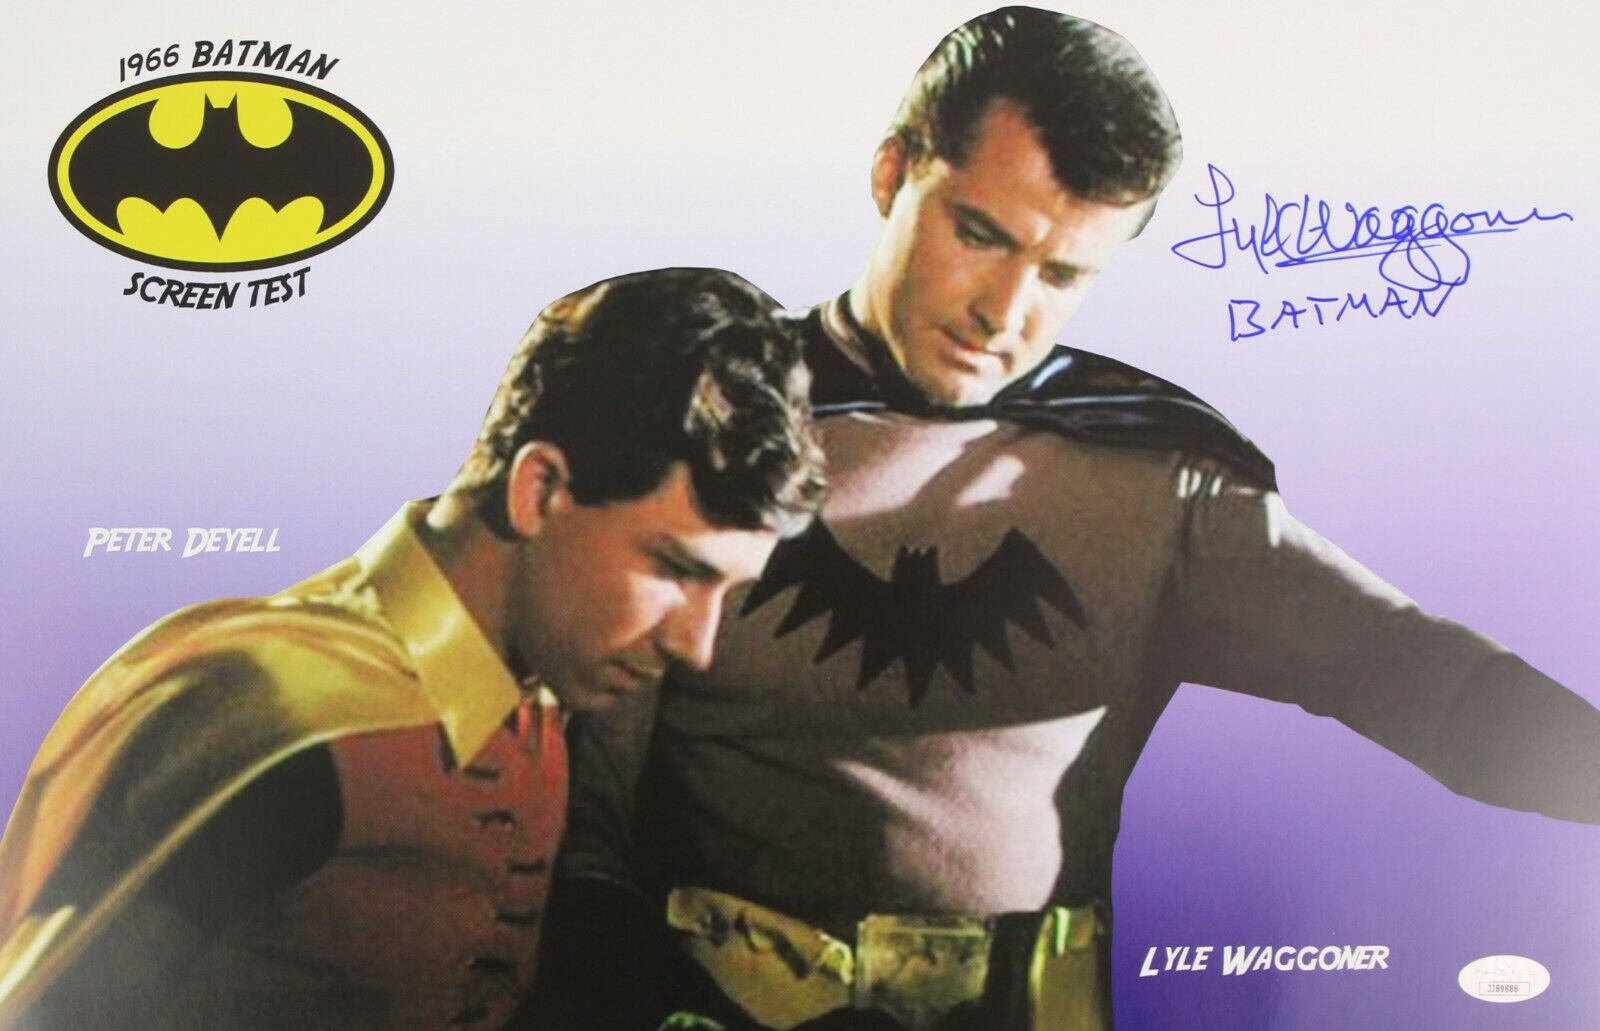 1966 Lyle Waggoner Batman Screen Test Signed 11x17 Photo (JSA)